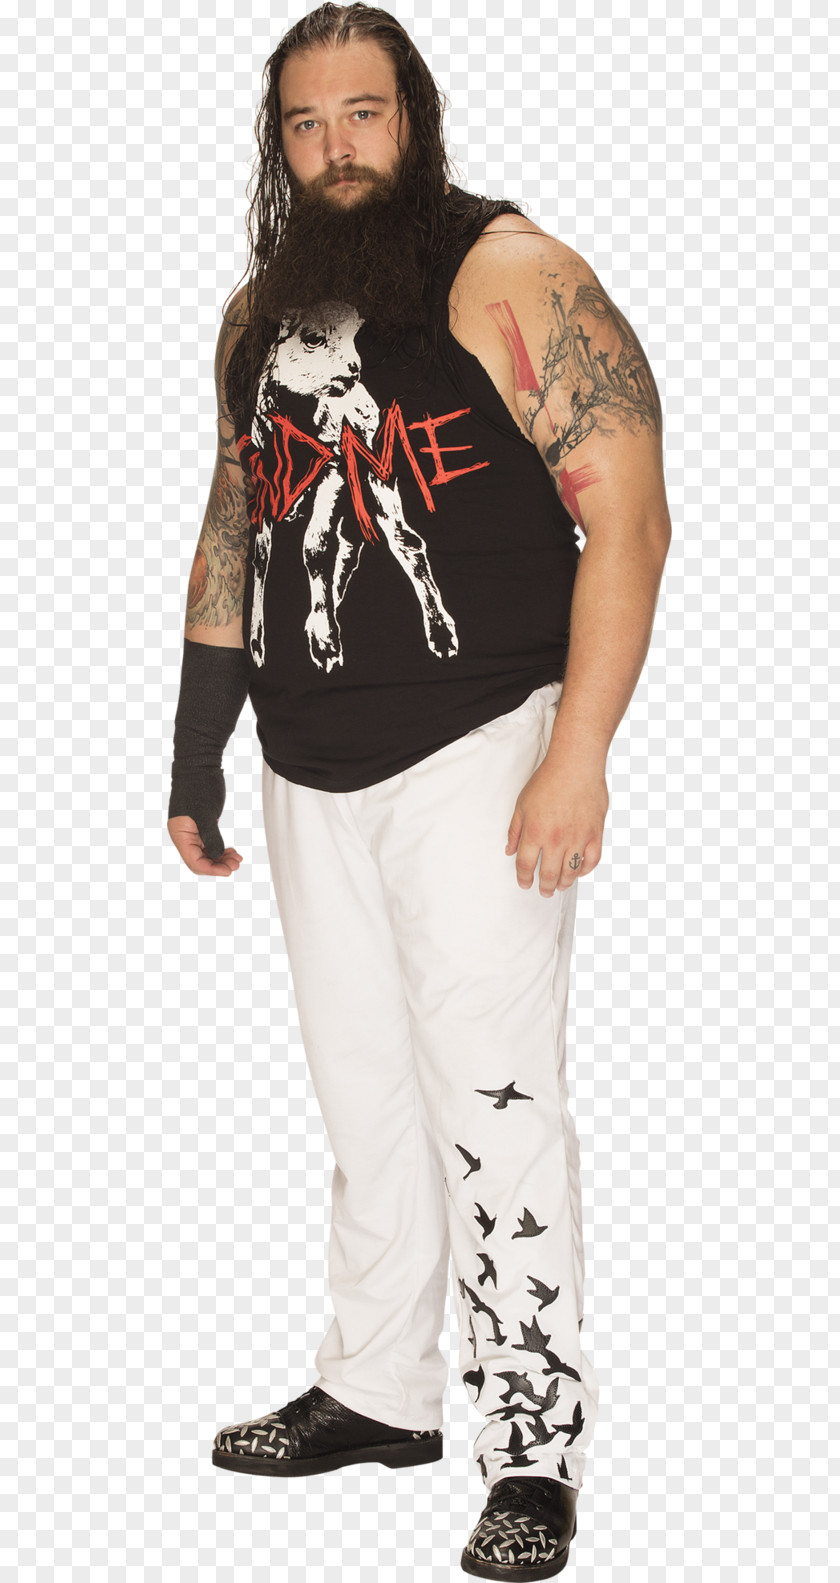 Bray Wyatt Desktop Wallpaper T-shirt PNG